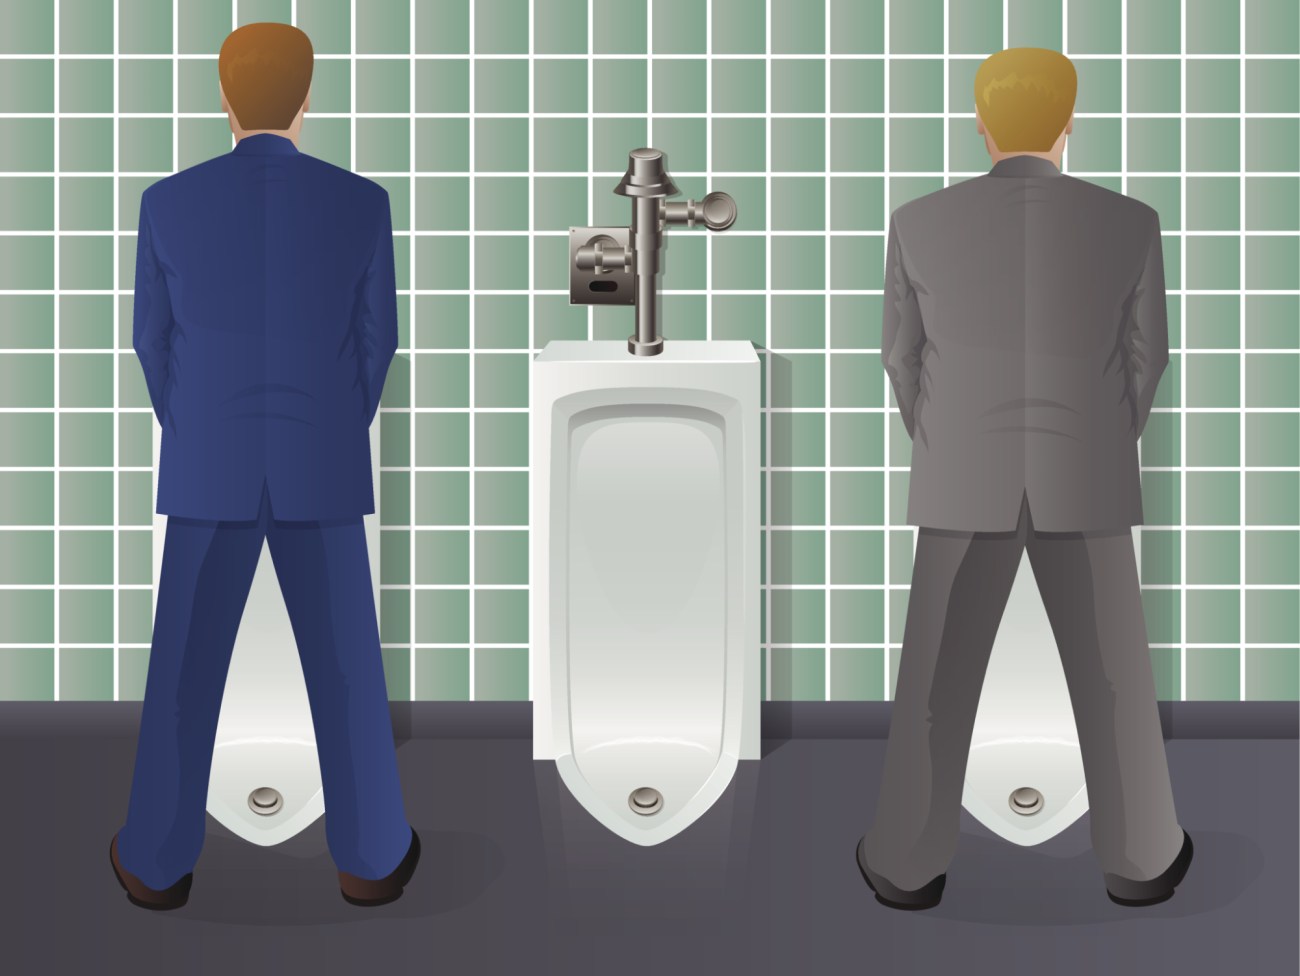 Men Using Urinal